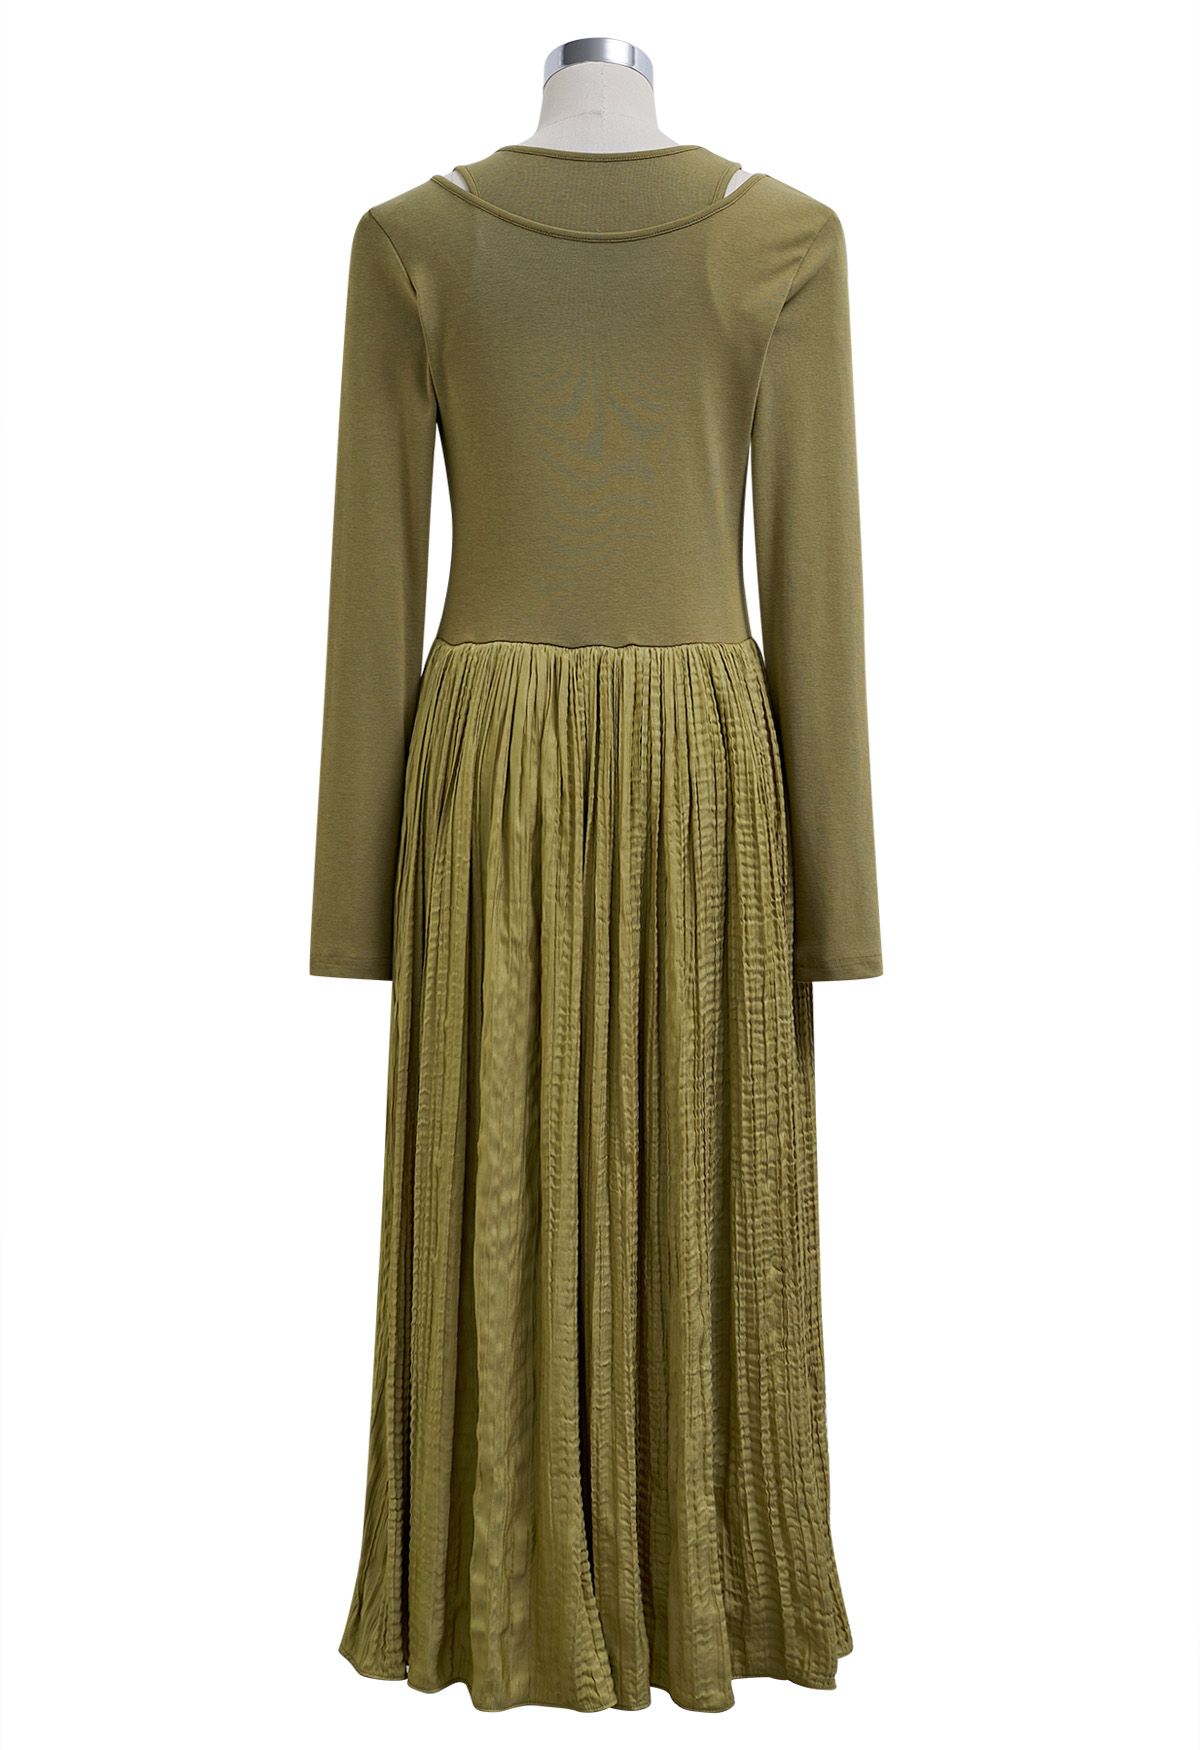 Fake Two-Piece Spliced Midi Dress in Moss Green